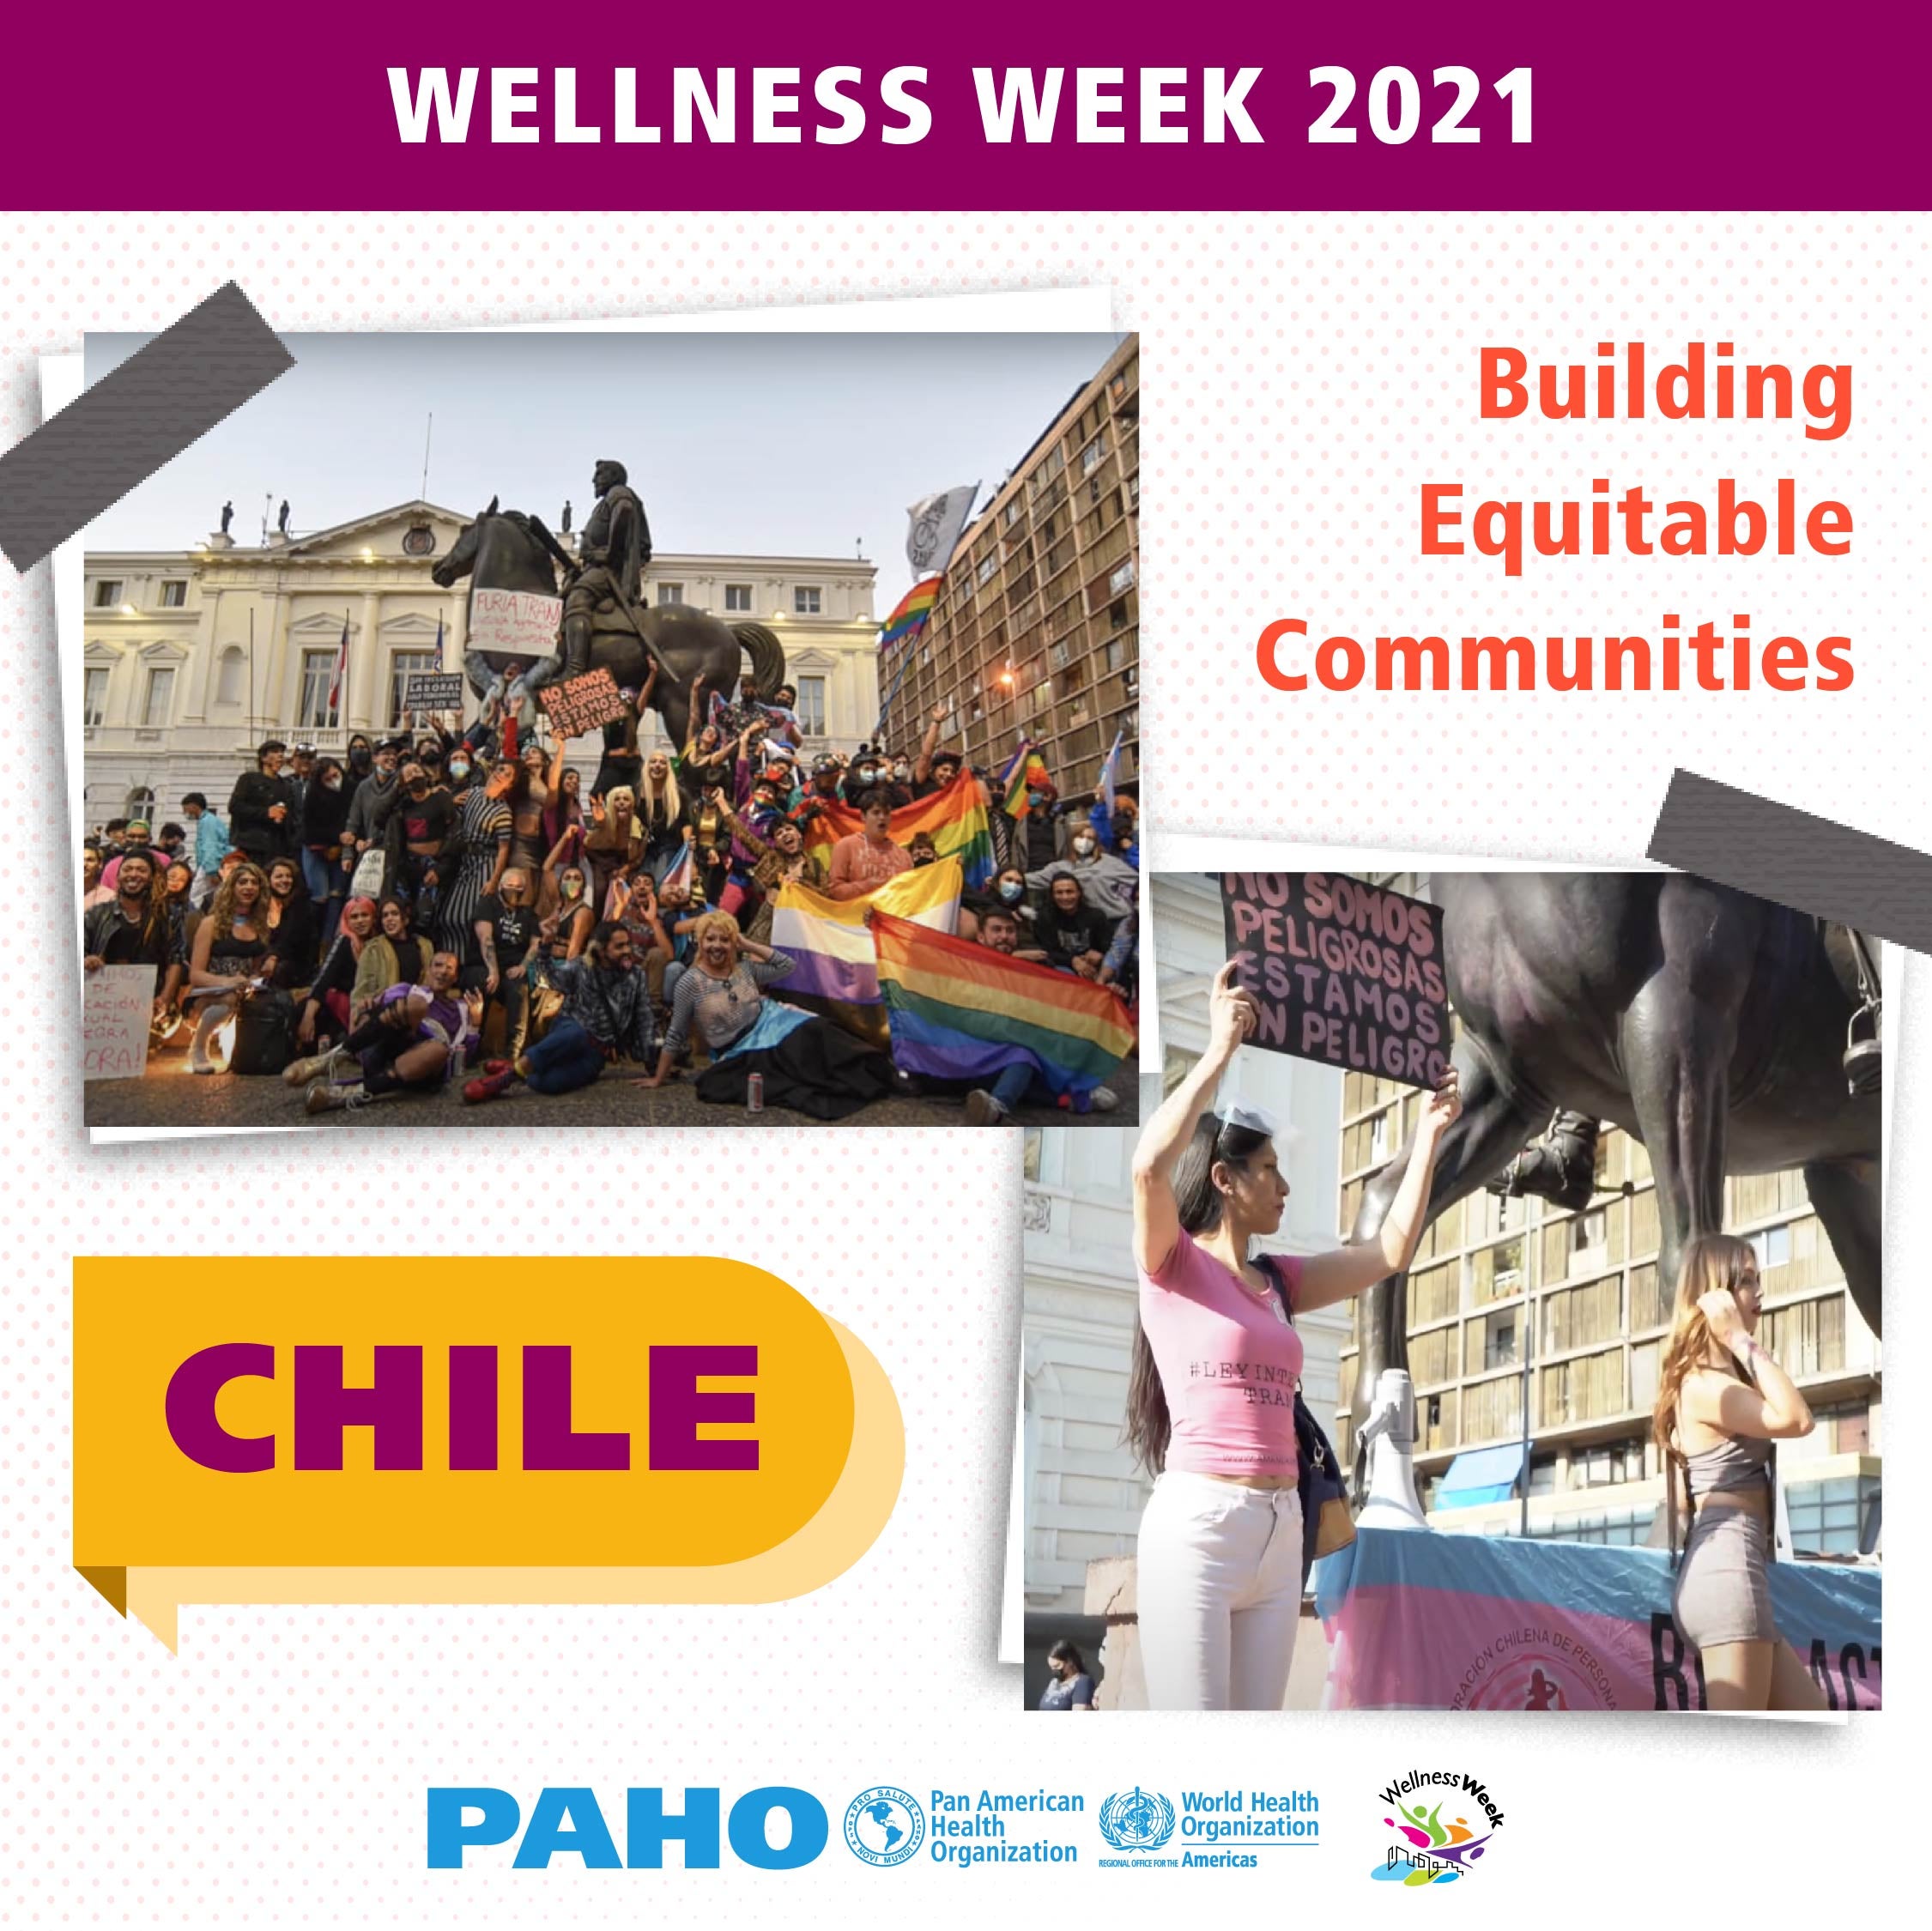 Chile - Building Equitable Communities